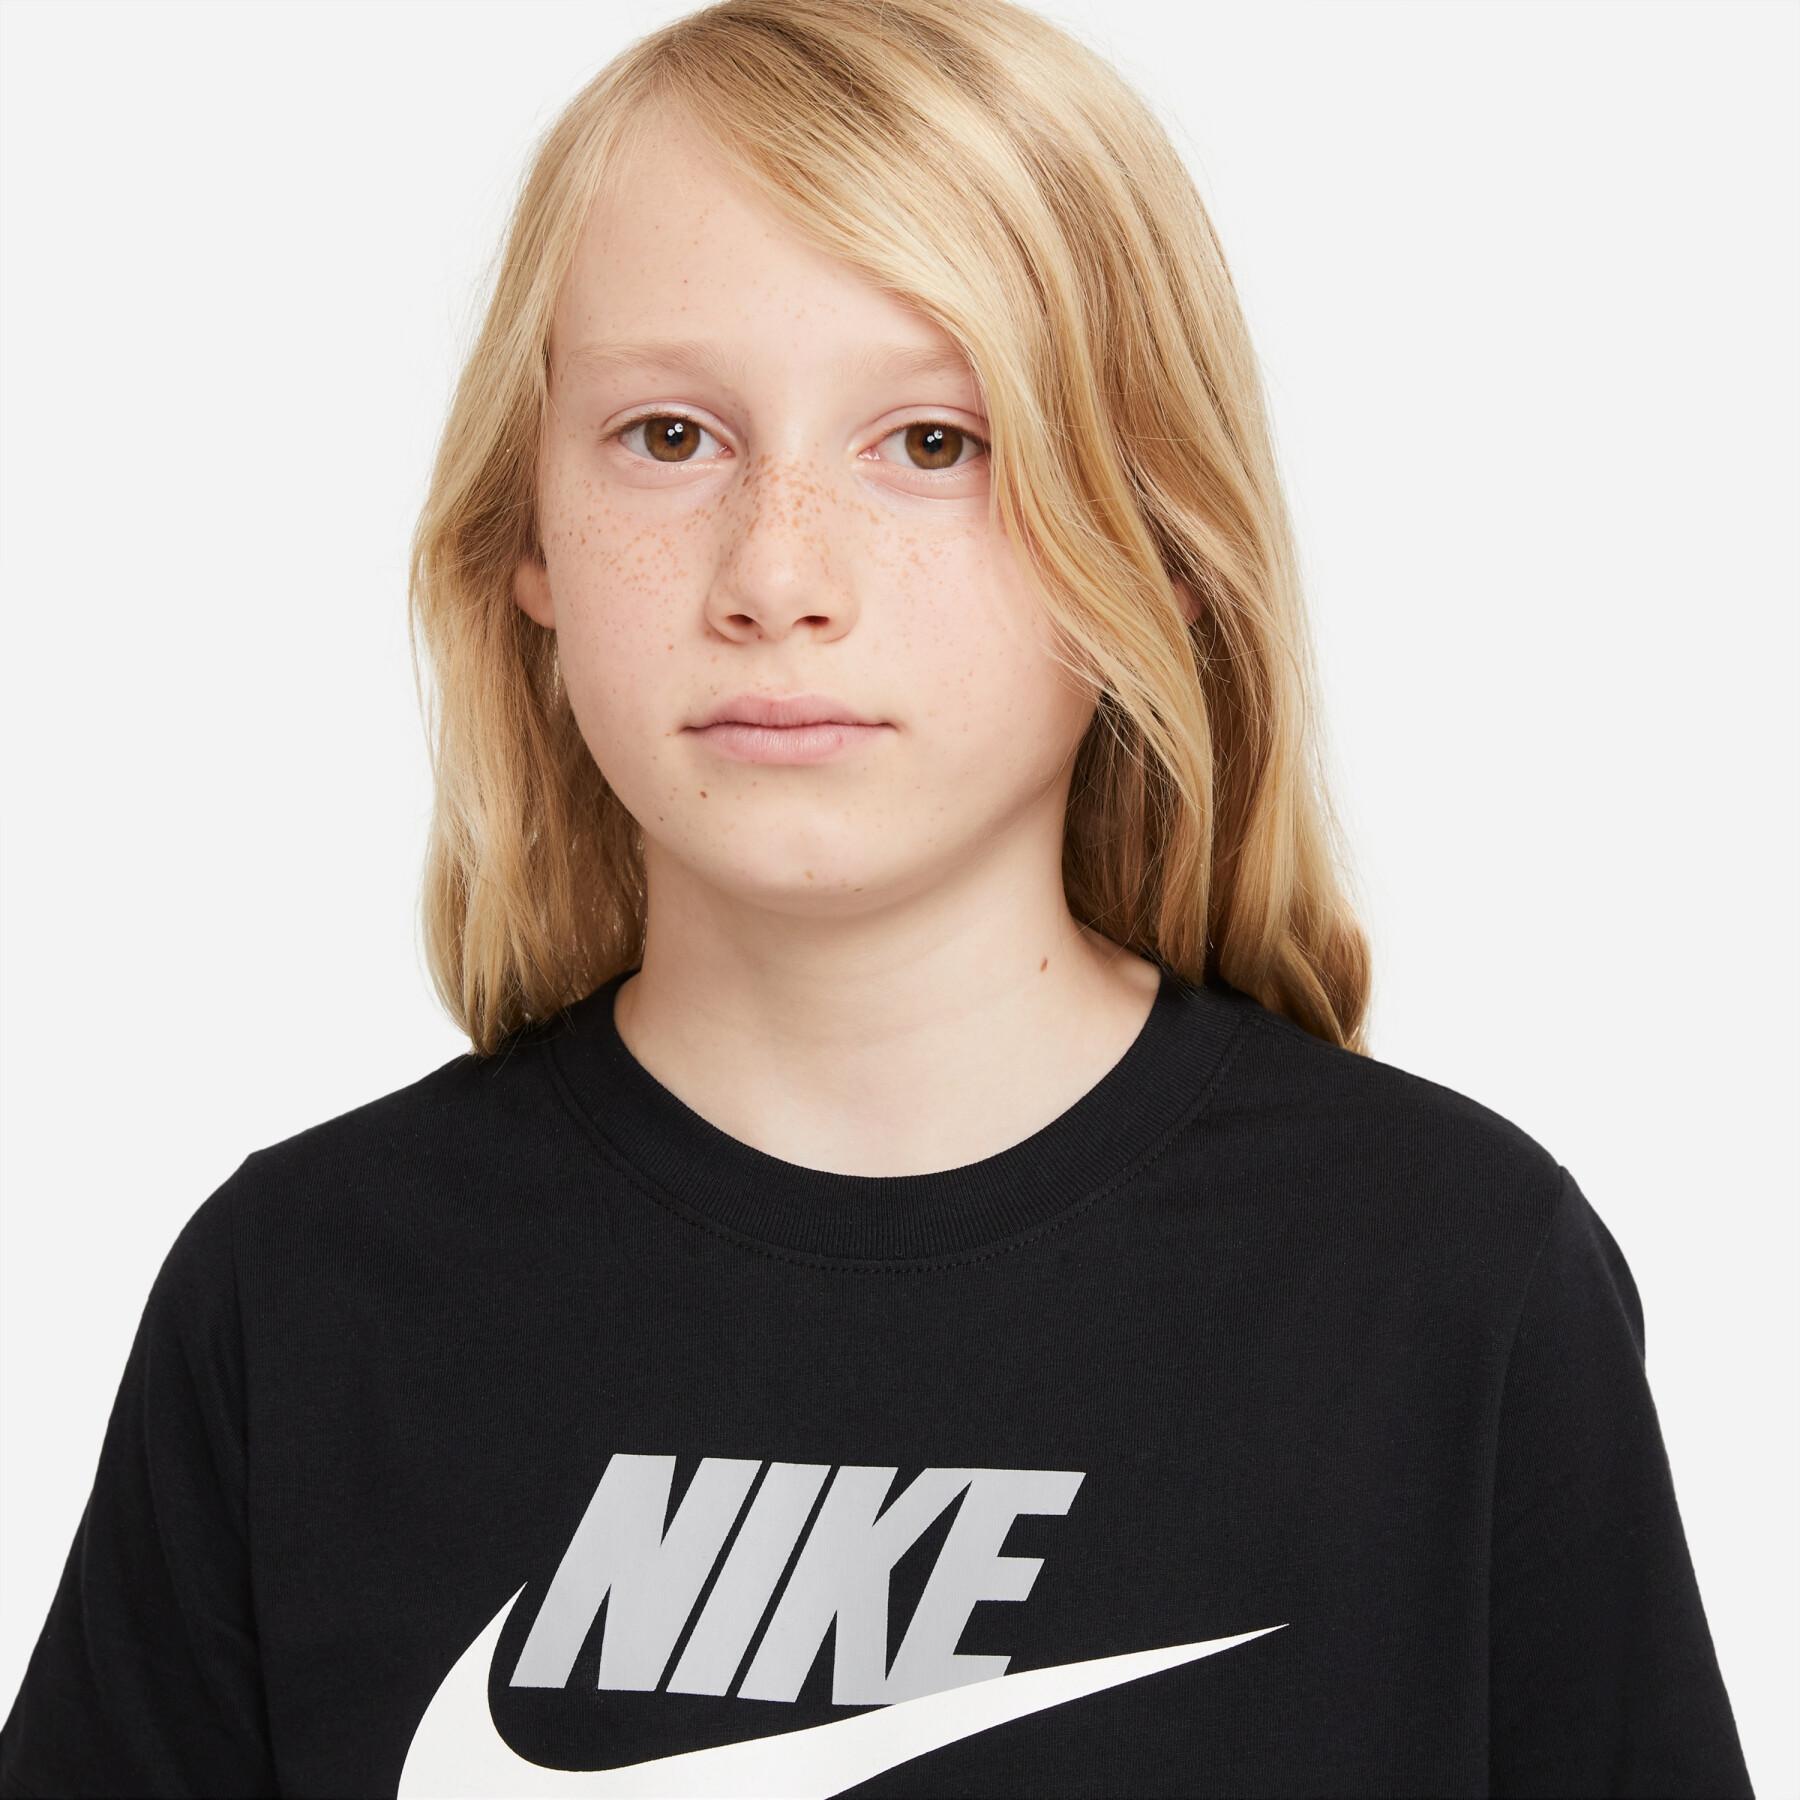 Child's T-shirt Nike sportswear